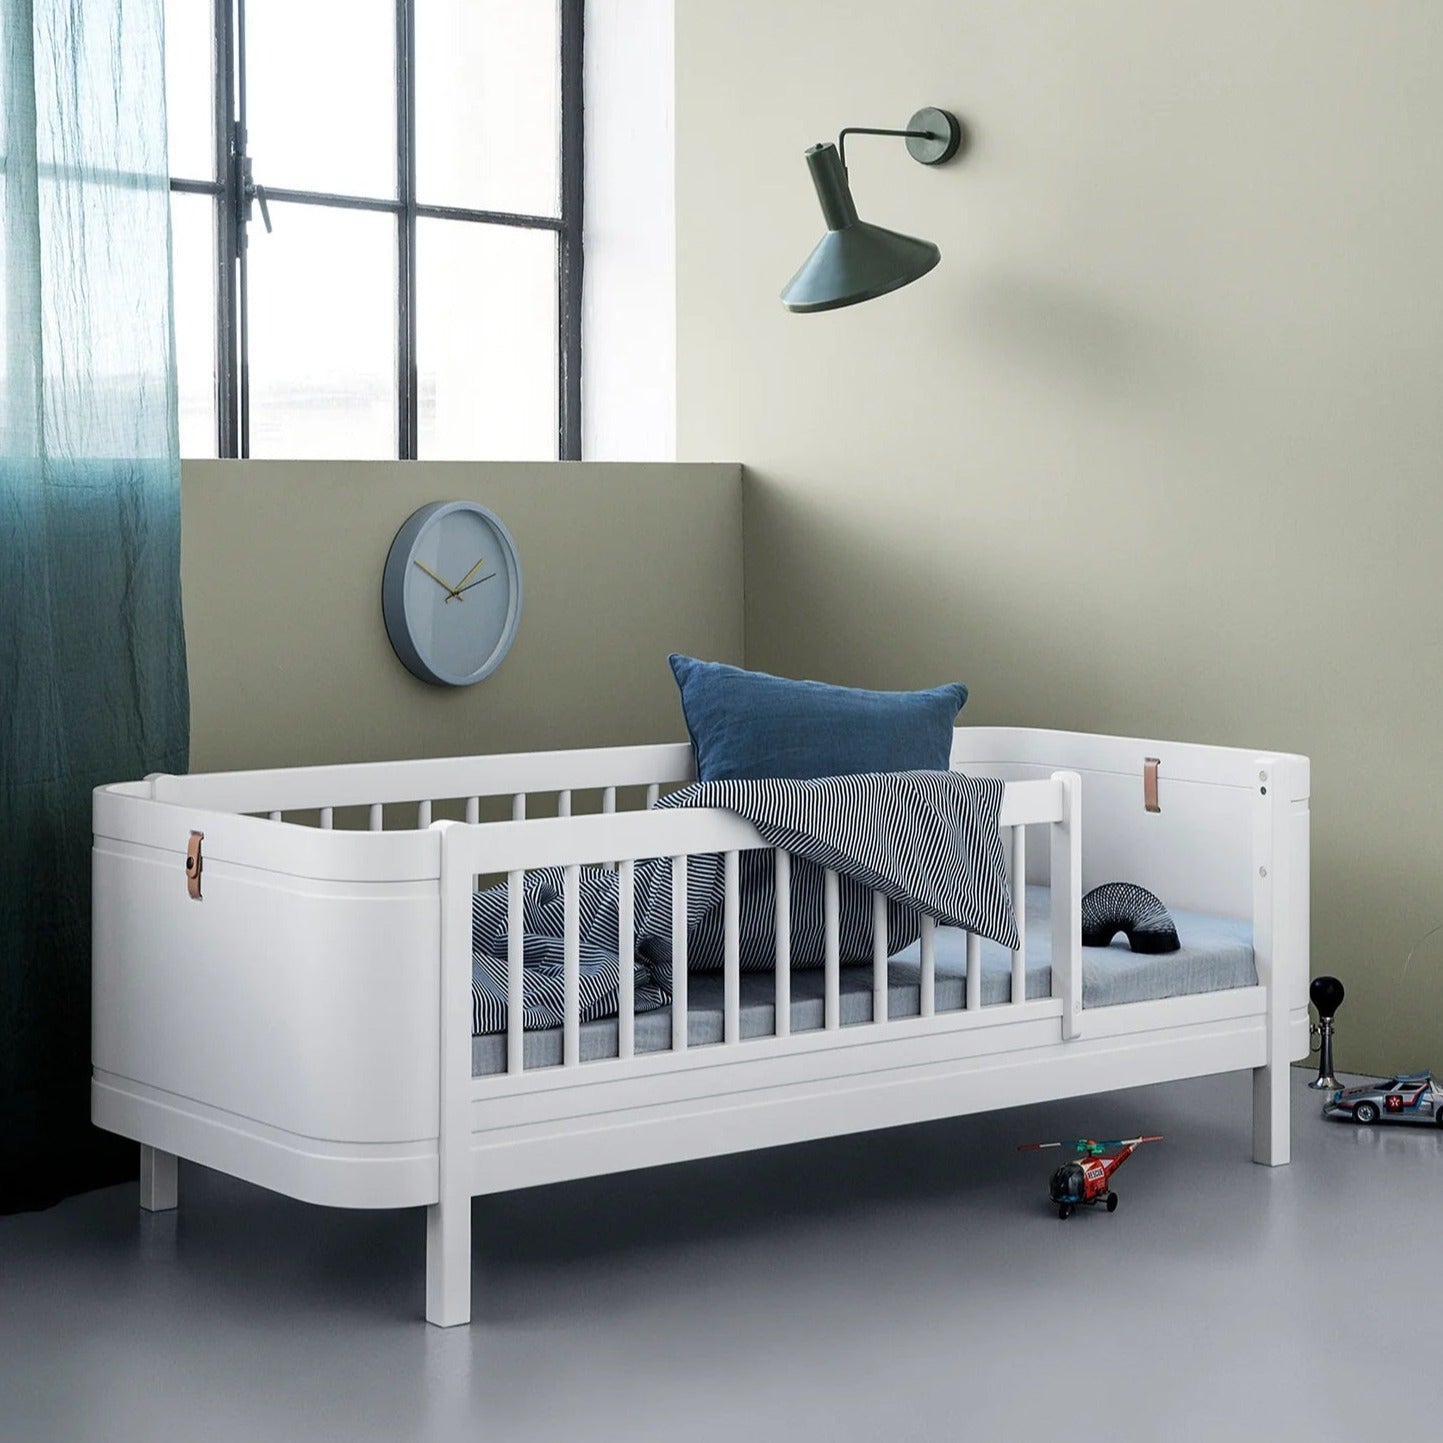 Oliver Furniture Wood Mini+ Junior Bed - White